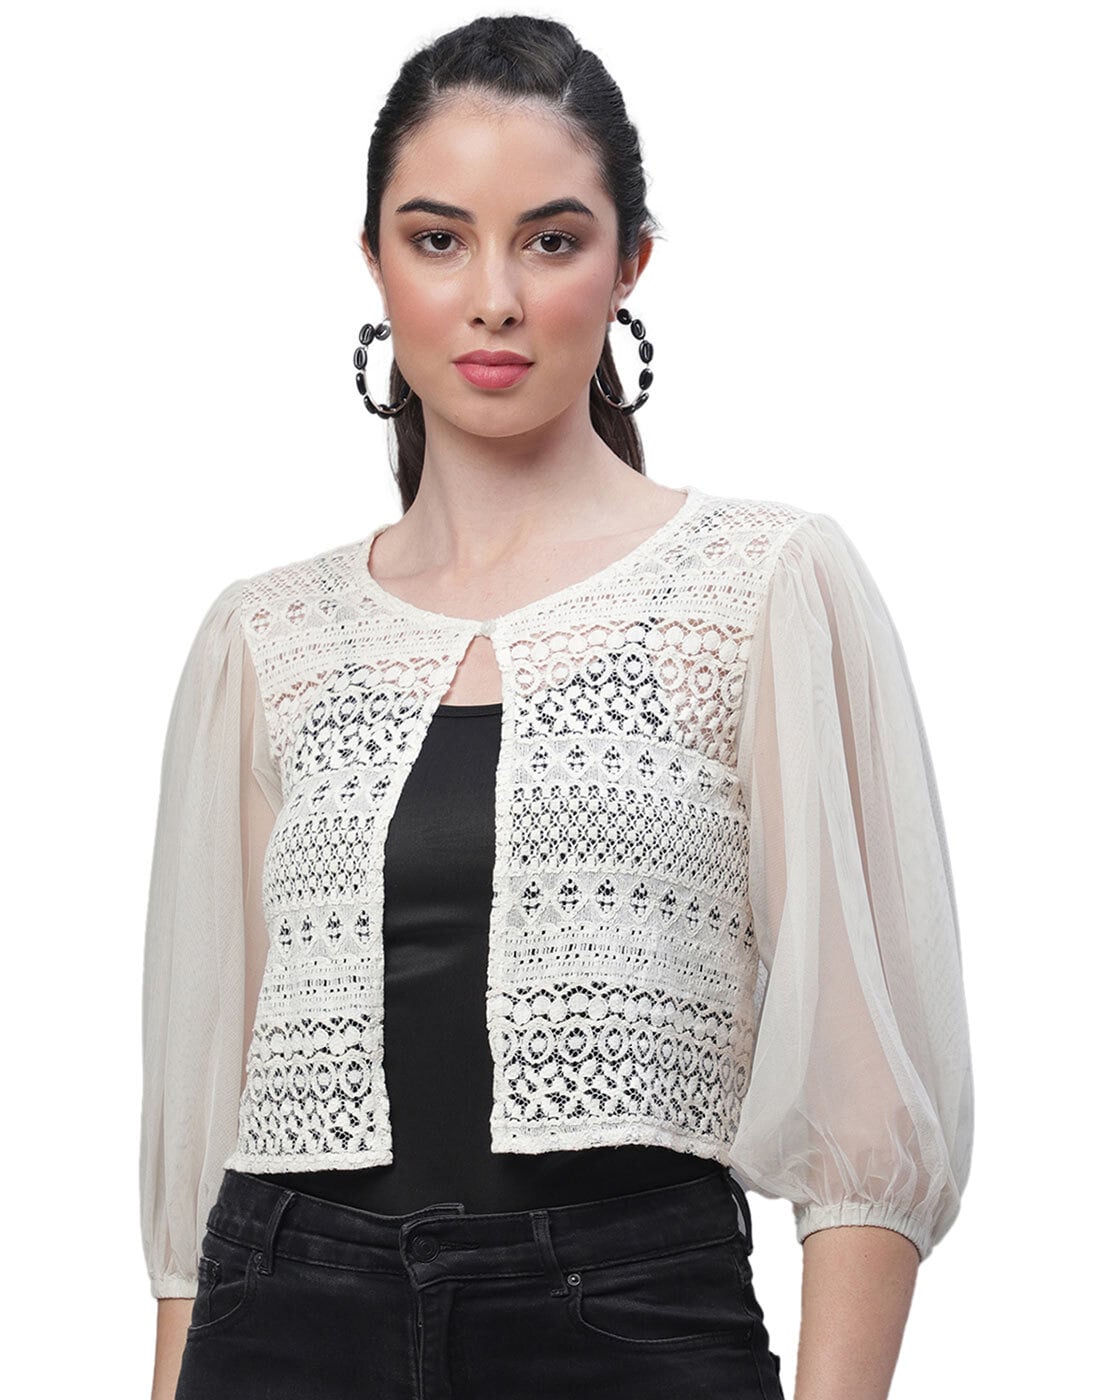 PATRORNA Women's Long Sleeve White Cardign Bolero Open Shrug in White (Size  S, 9PA001WHS) : Amazon.in: Fashion